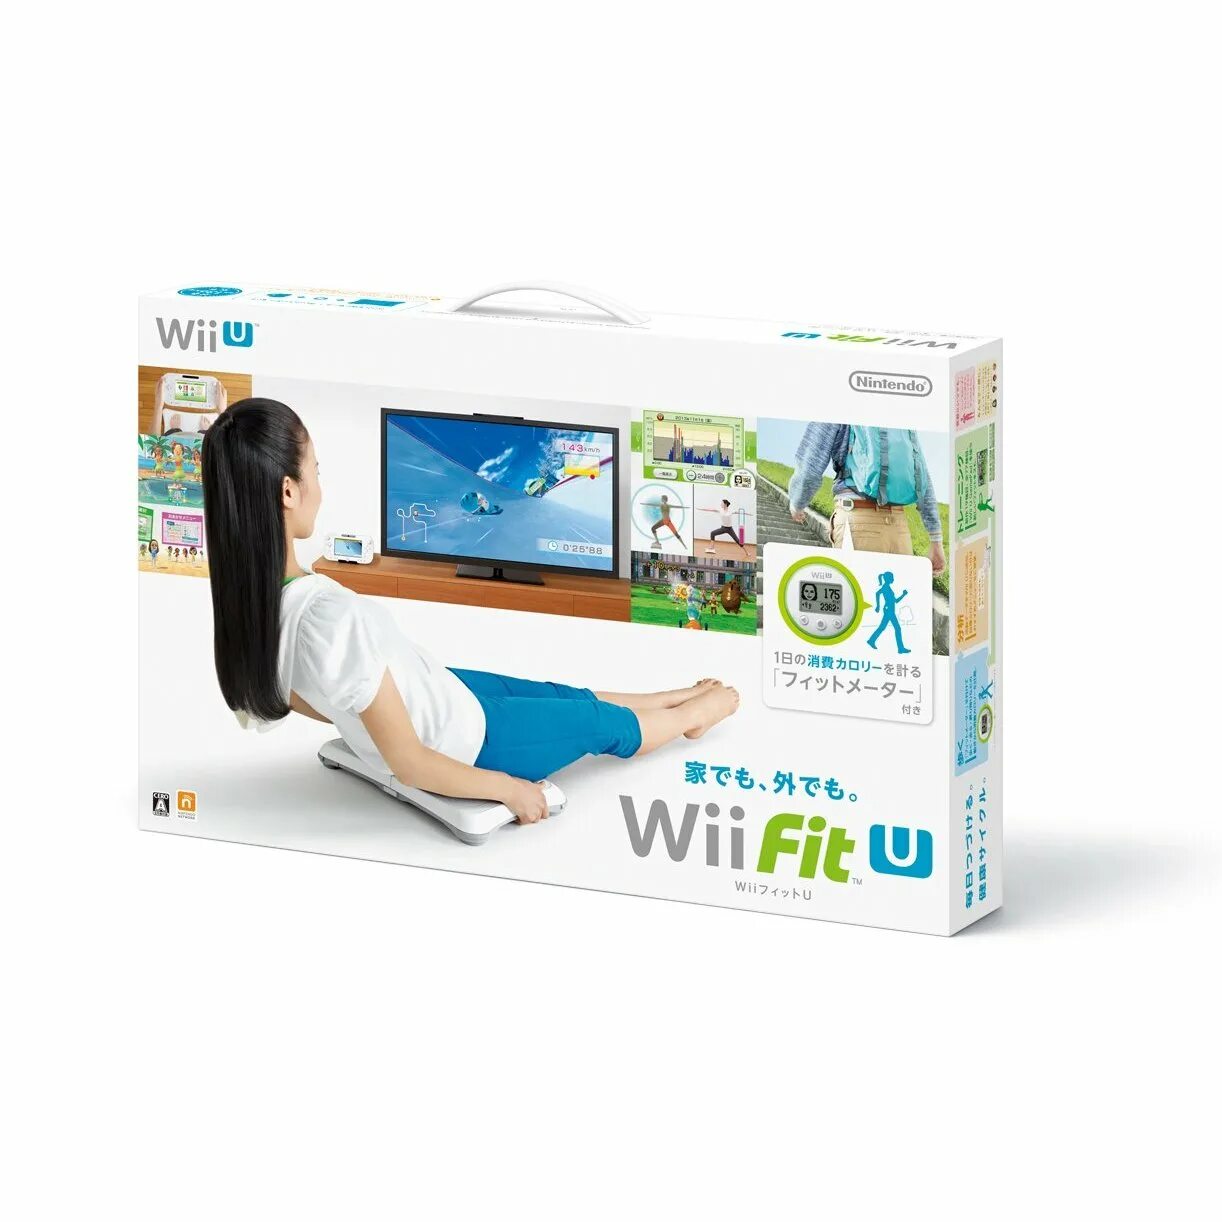 Wii fit. Wii Fit u Wii. Wii Fit u Nintendo Wii u. Nintendo Wii Trainer Fit 18. Wii Fit feet.